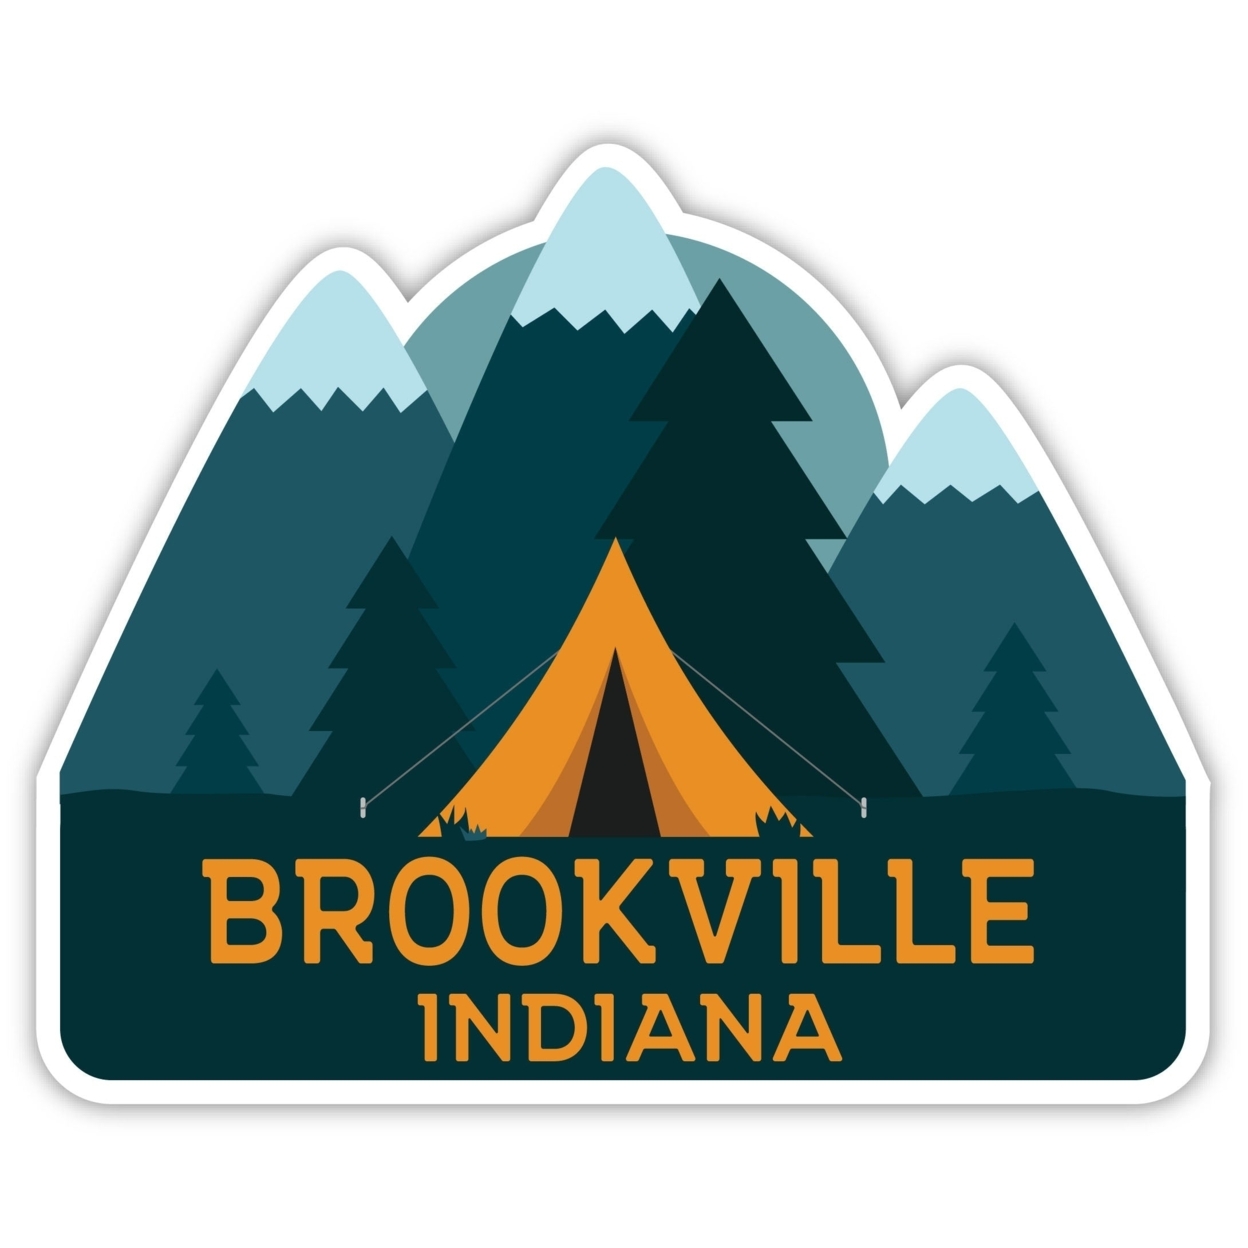 Brookville Indiana Souvenir Decorative Stickers (Choose Theme And Size) - Single Unit, 6-Inch, Camp Life